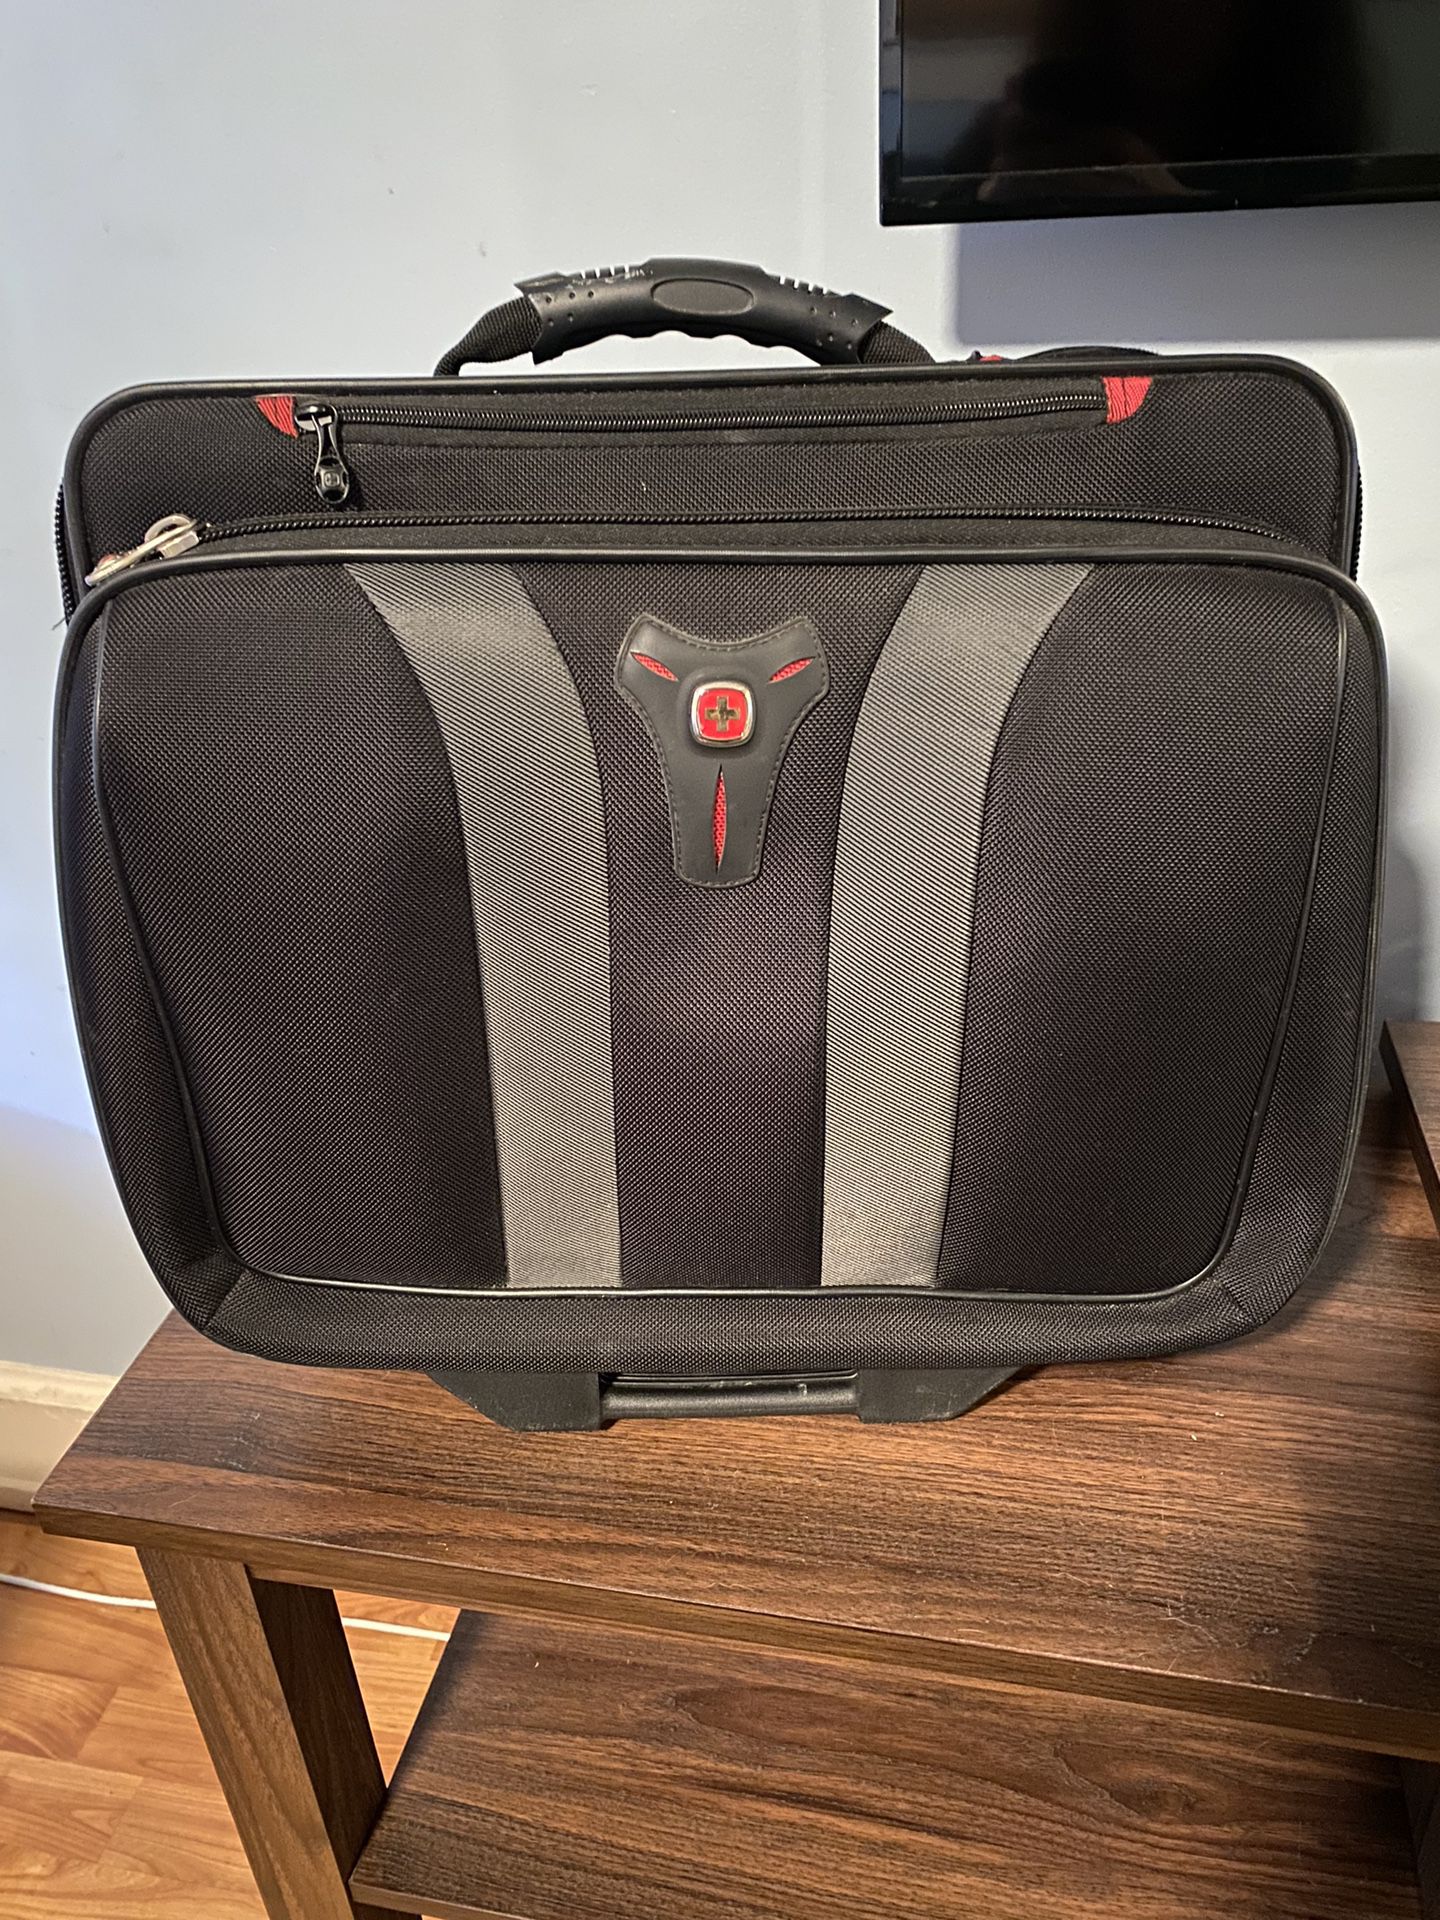 Swiss Gear Patriot Wheeled Business Case / Laptop Case